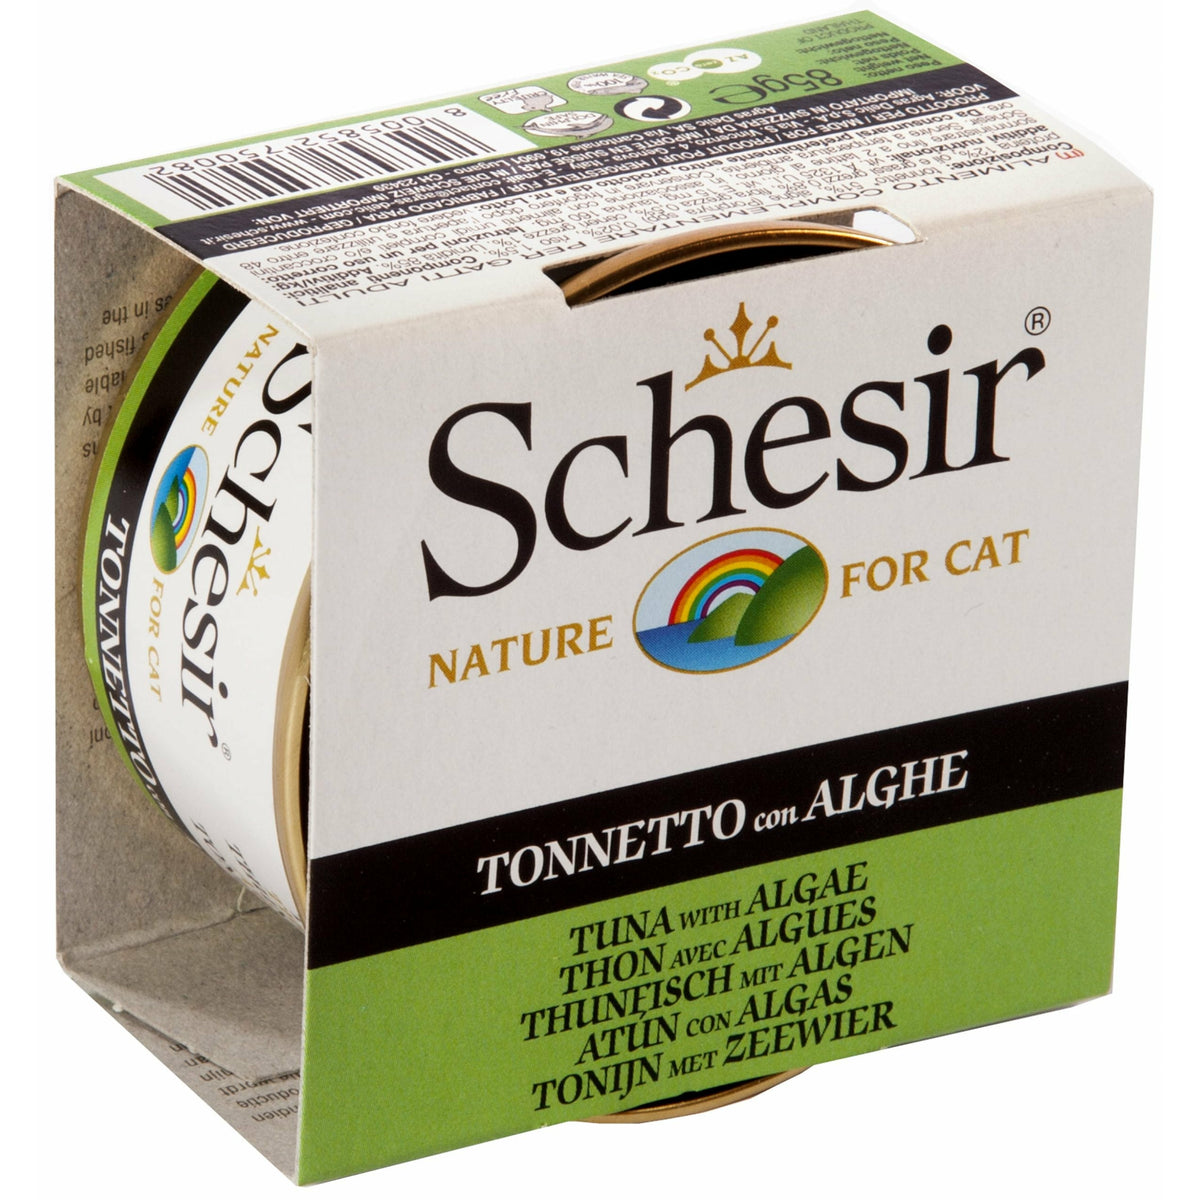 Schesir Tuna with Algae (85g) - Canned Cat Food